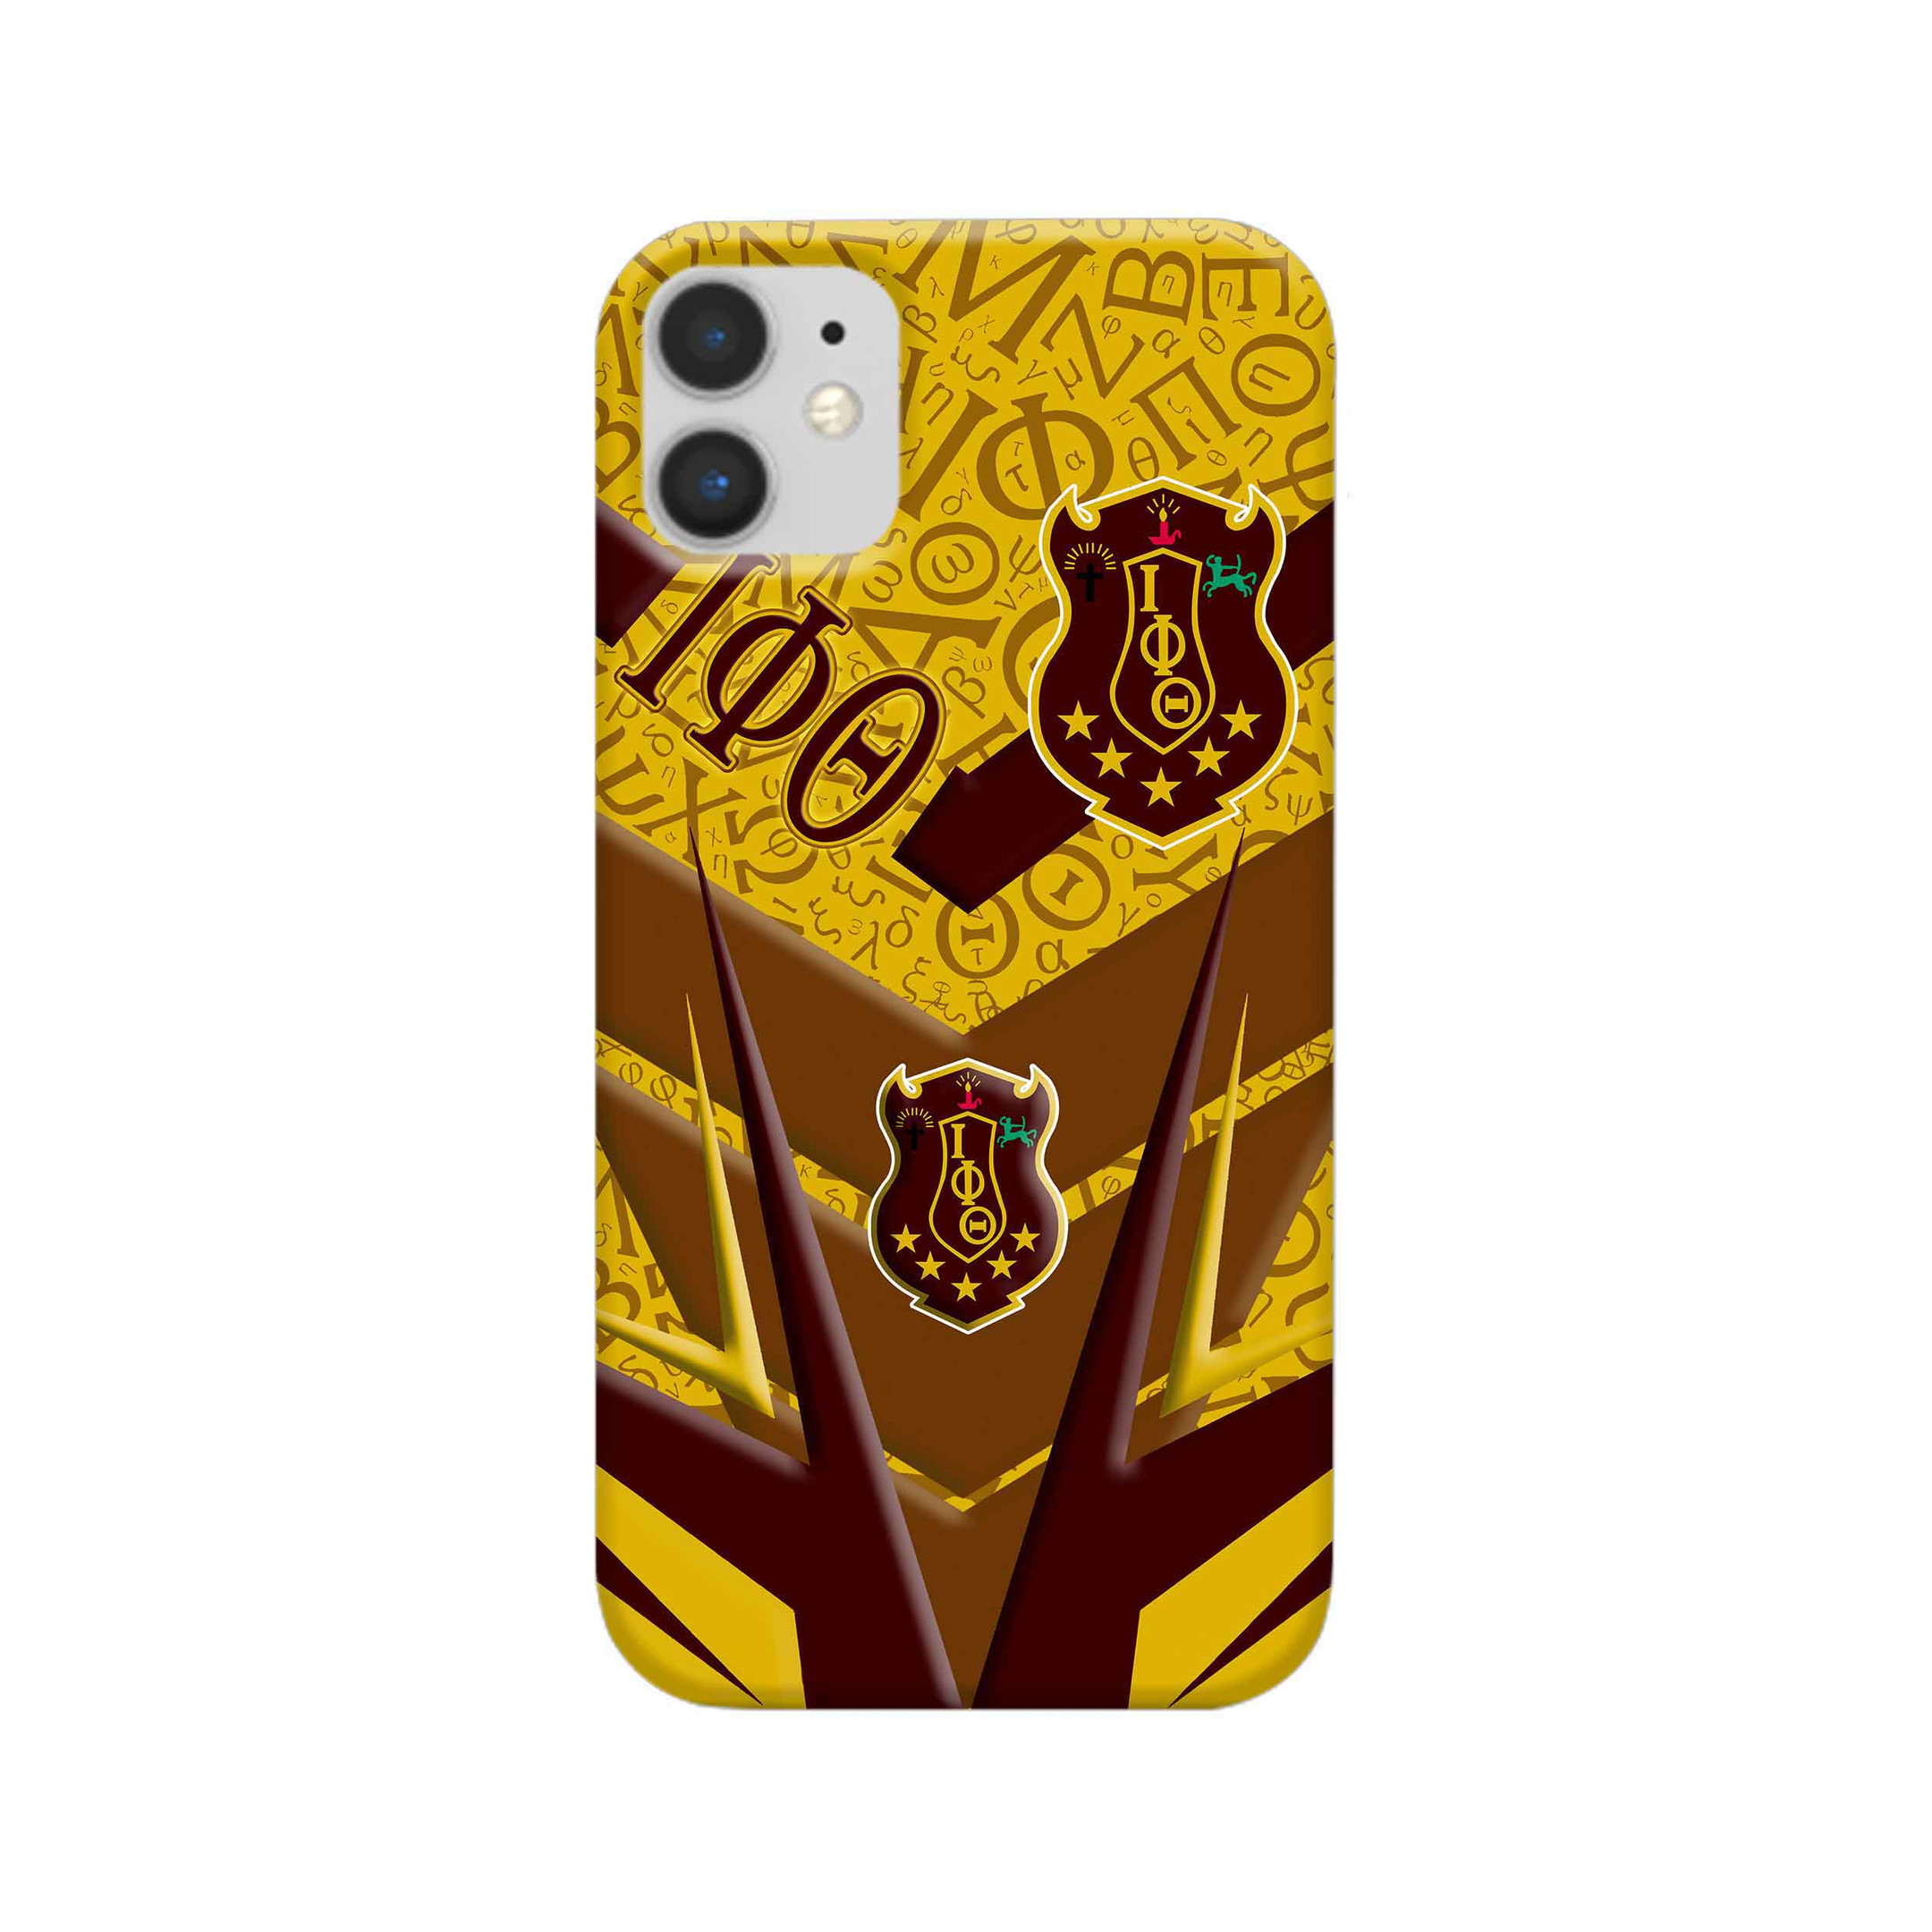 Africa Zone Phone Case - Iota Phi Theta  Sporty Style Phone Case A35